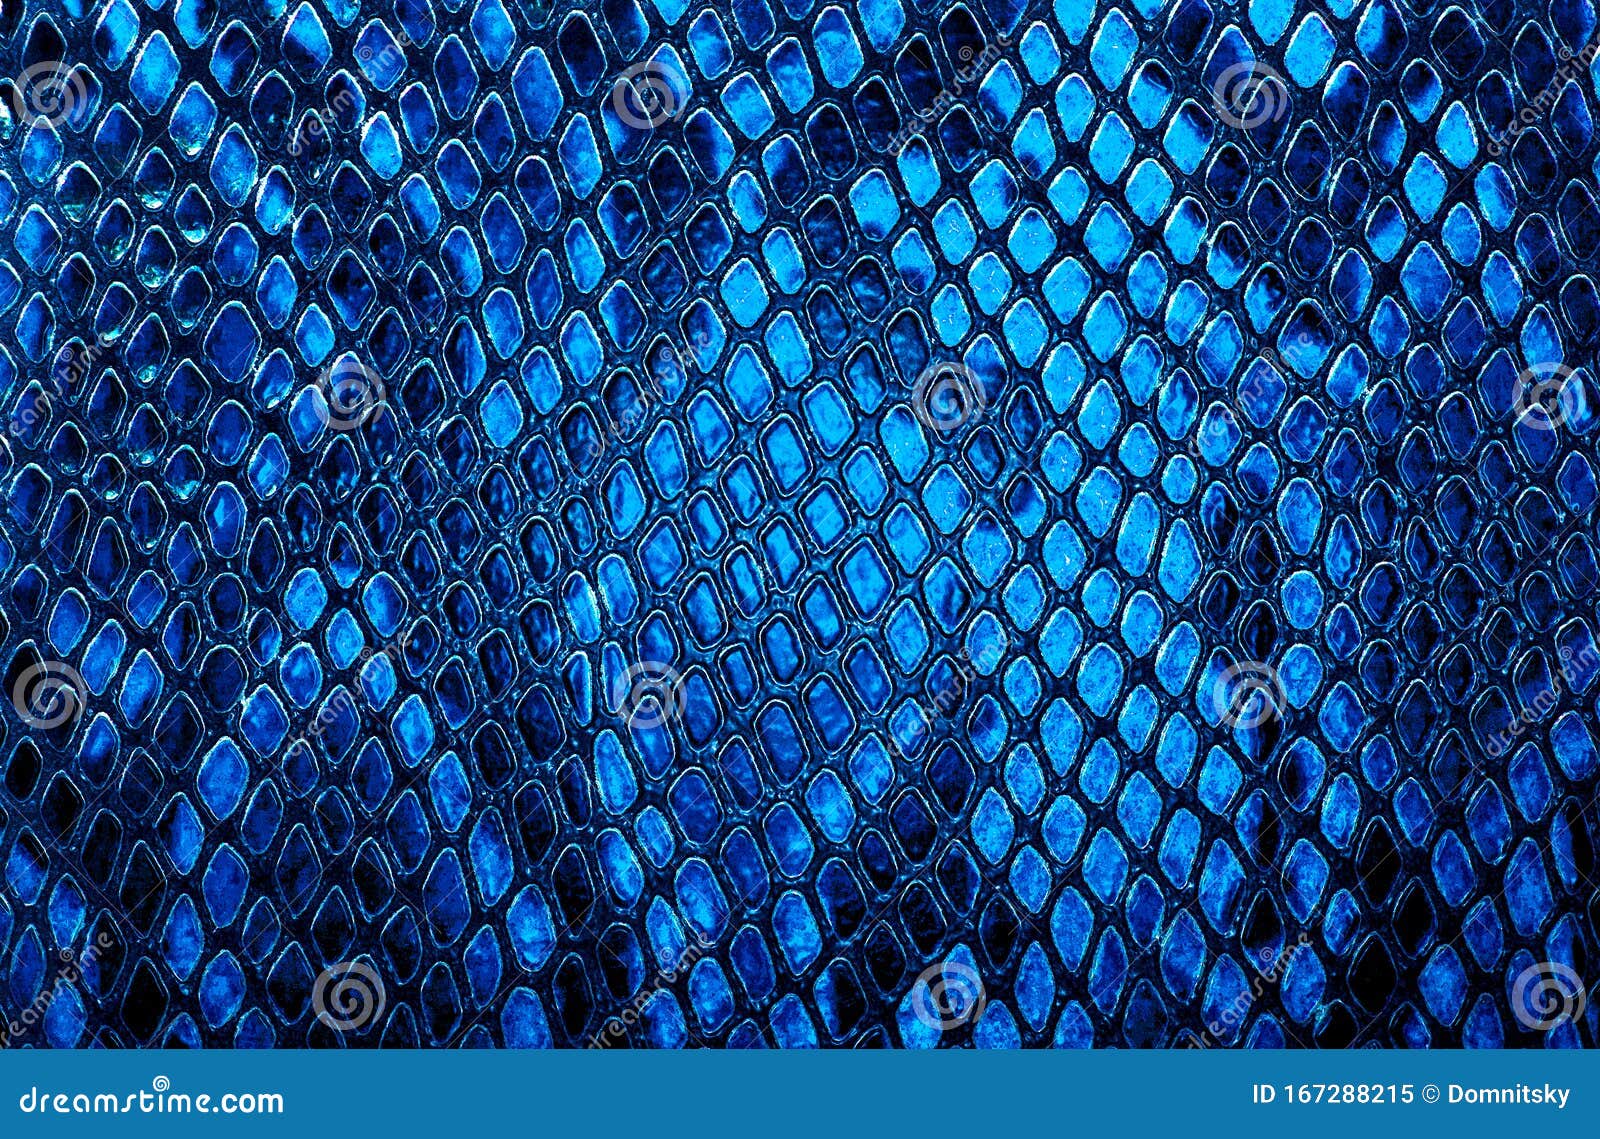 Snake skin background stock image. Image of blue, contrast - 167288215